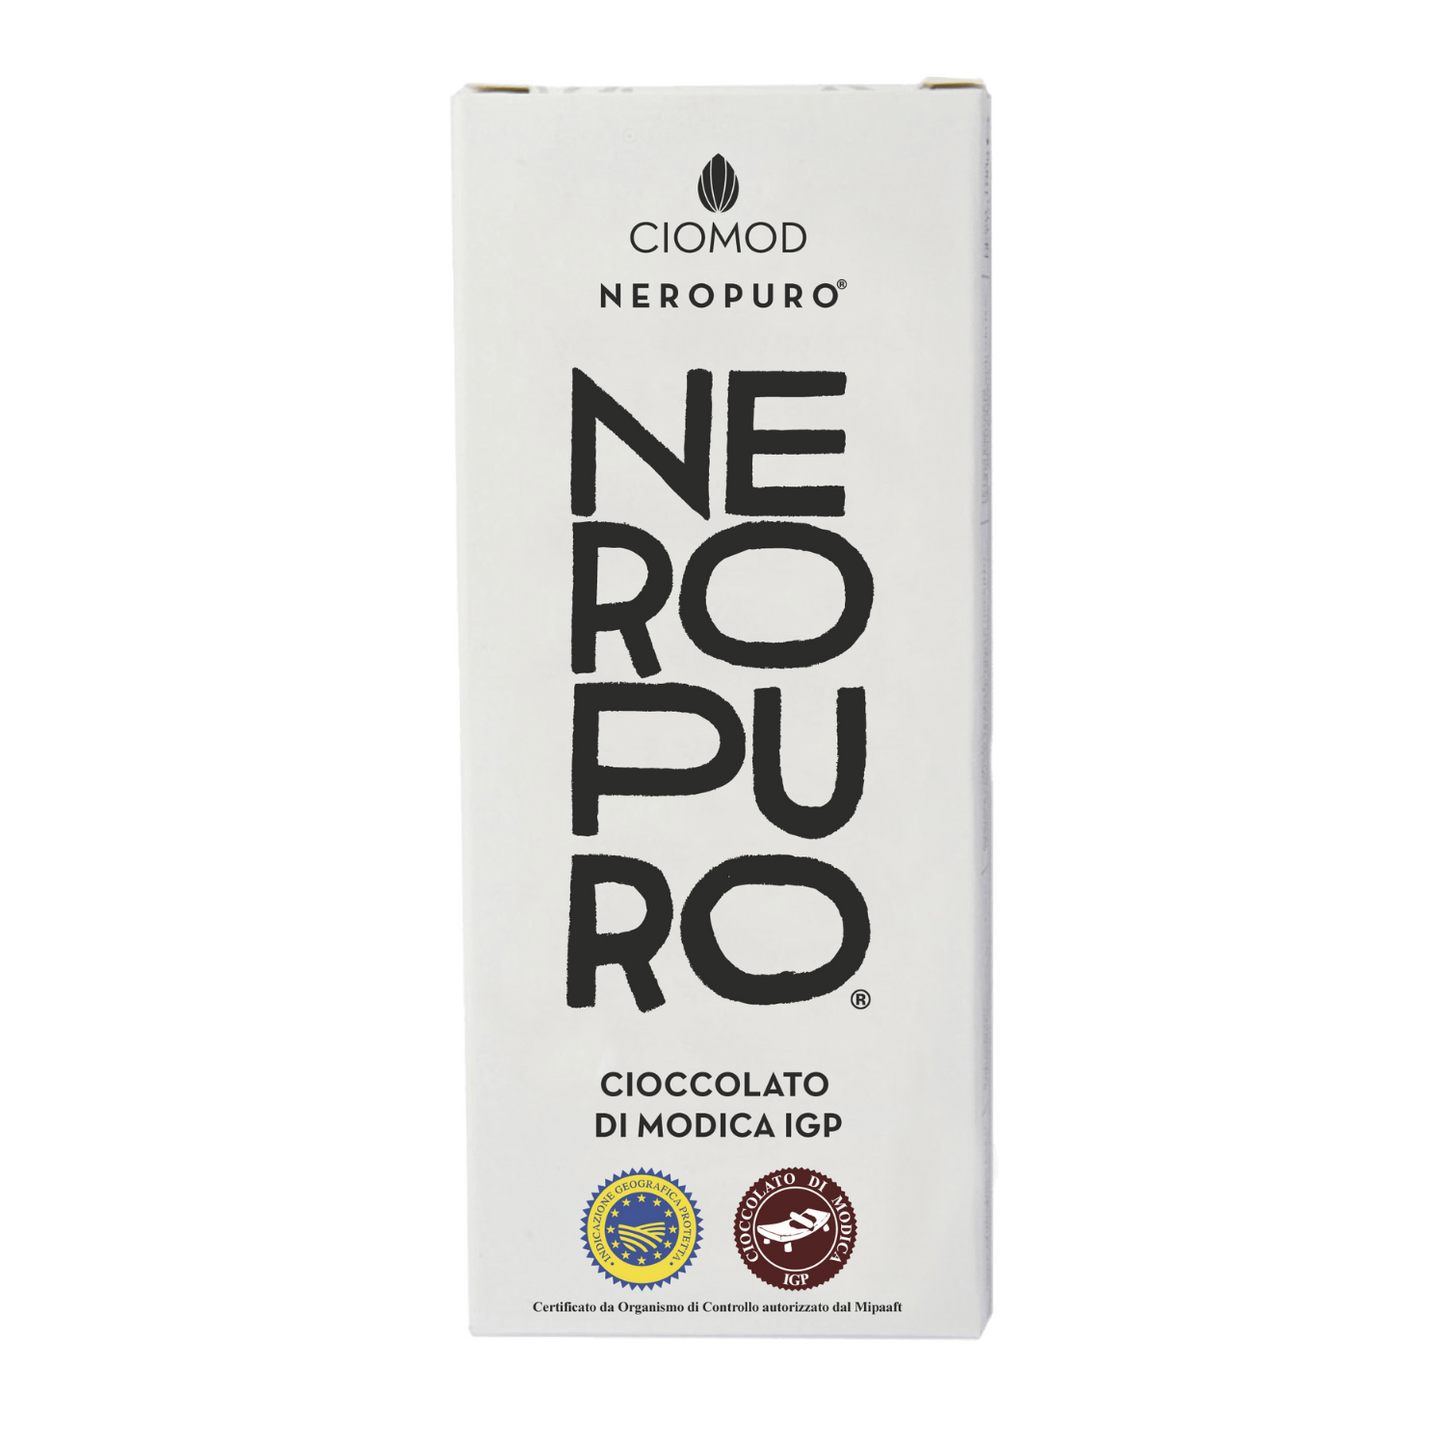 Chocolat Modica Igp Neropuro - Ciomod